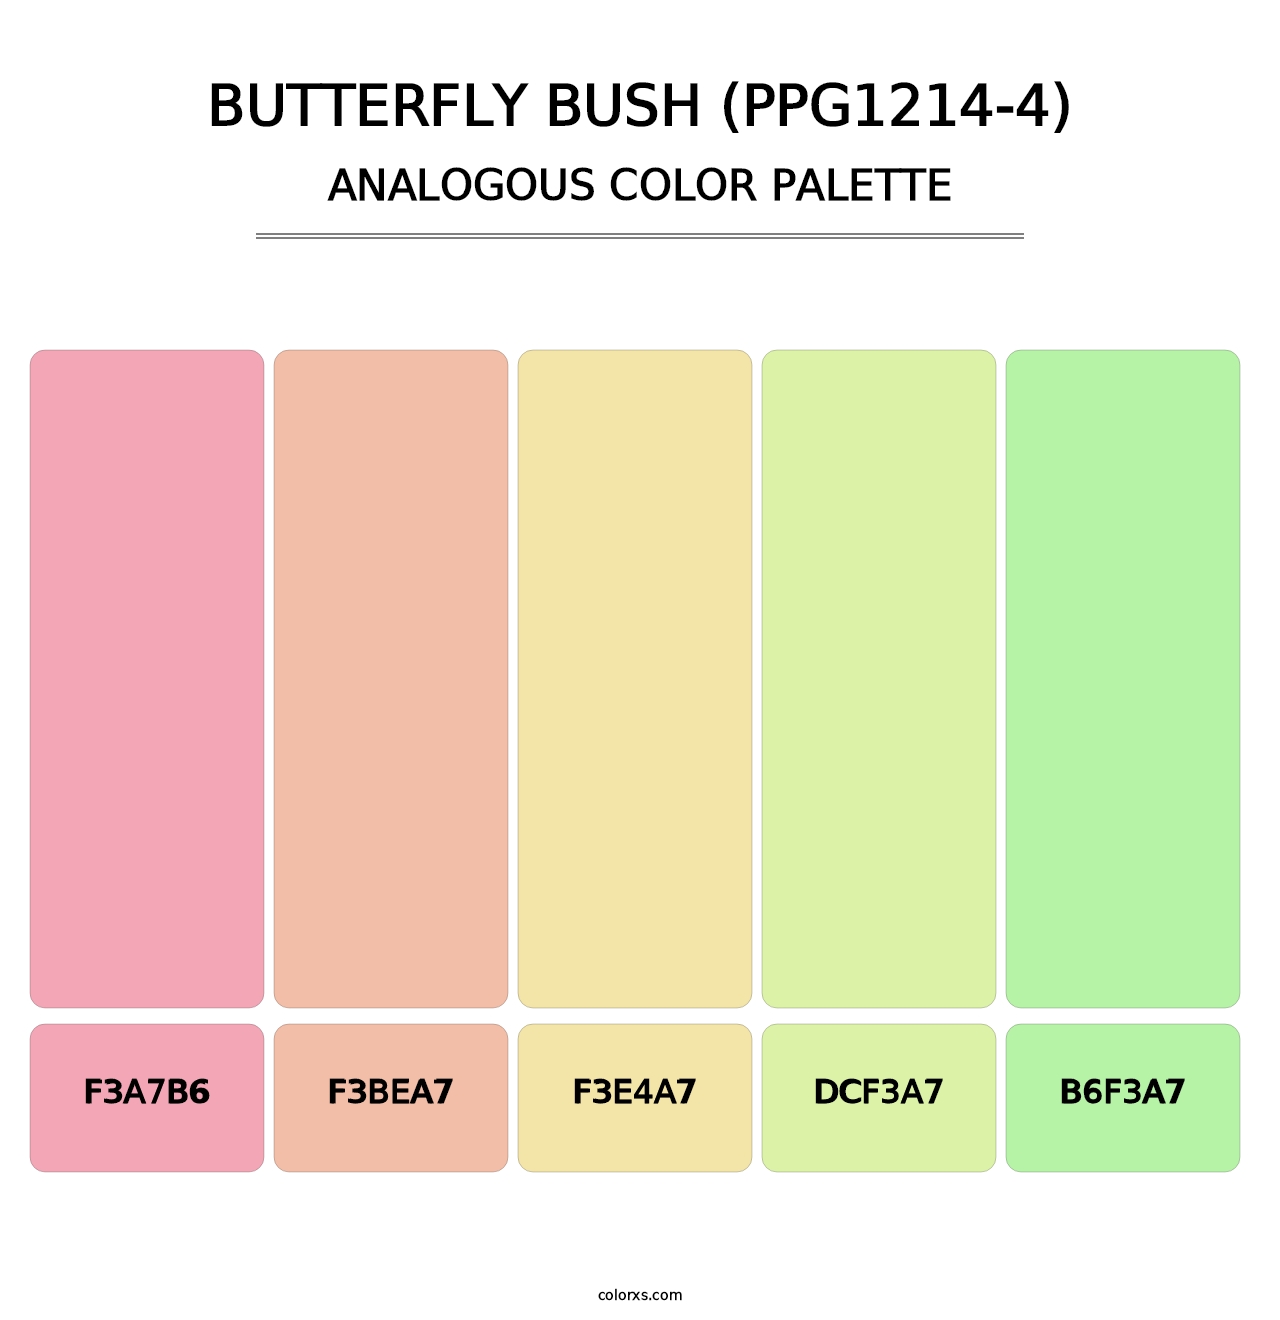 Butterfly Bush (PPG1214-4) - Analogous Color Palette